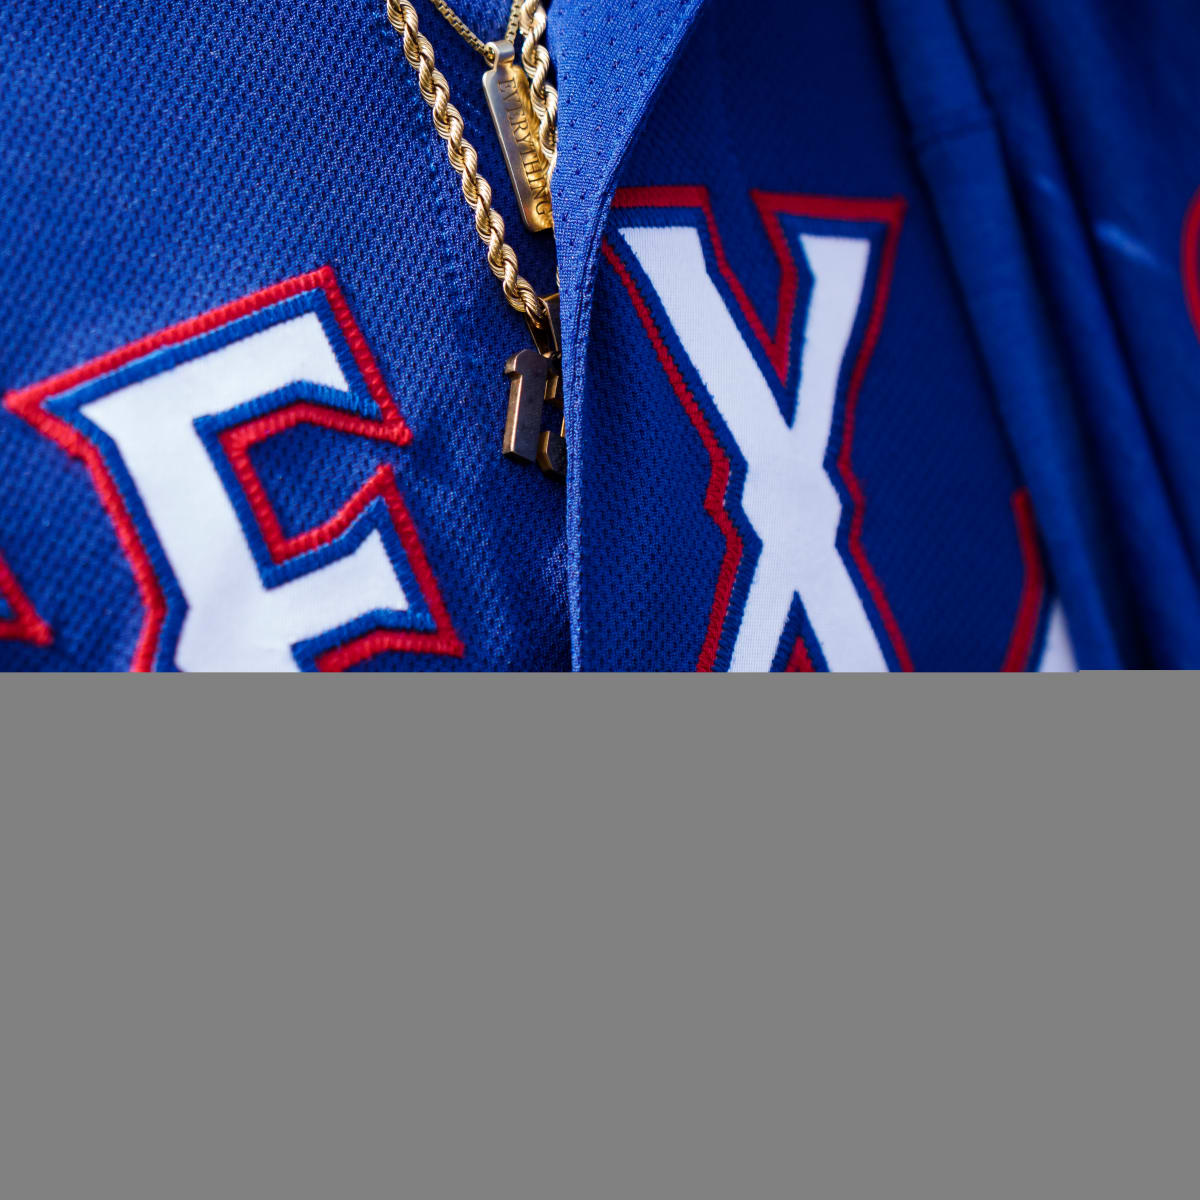 Texas Rangers - New gear dropping next week. 👀